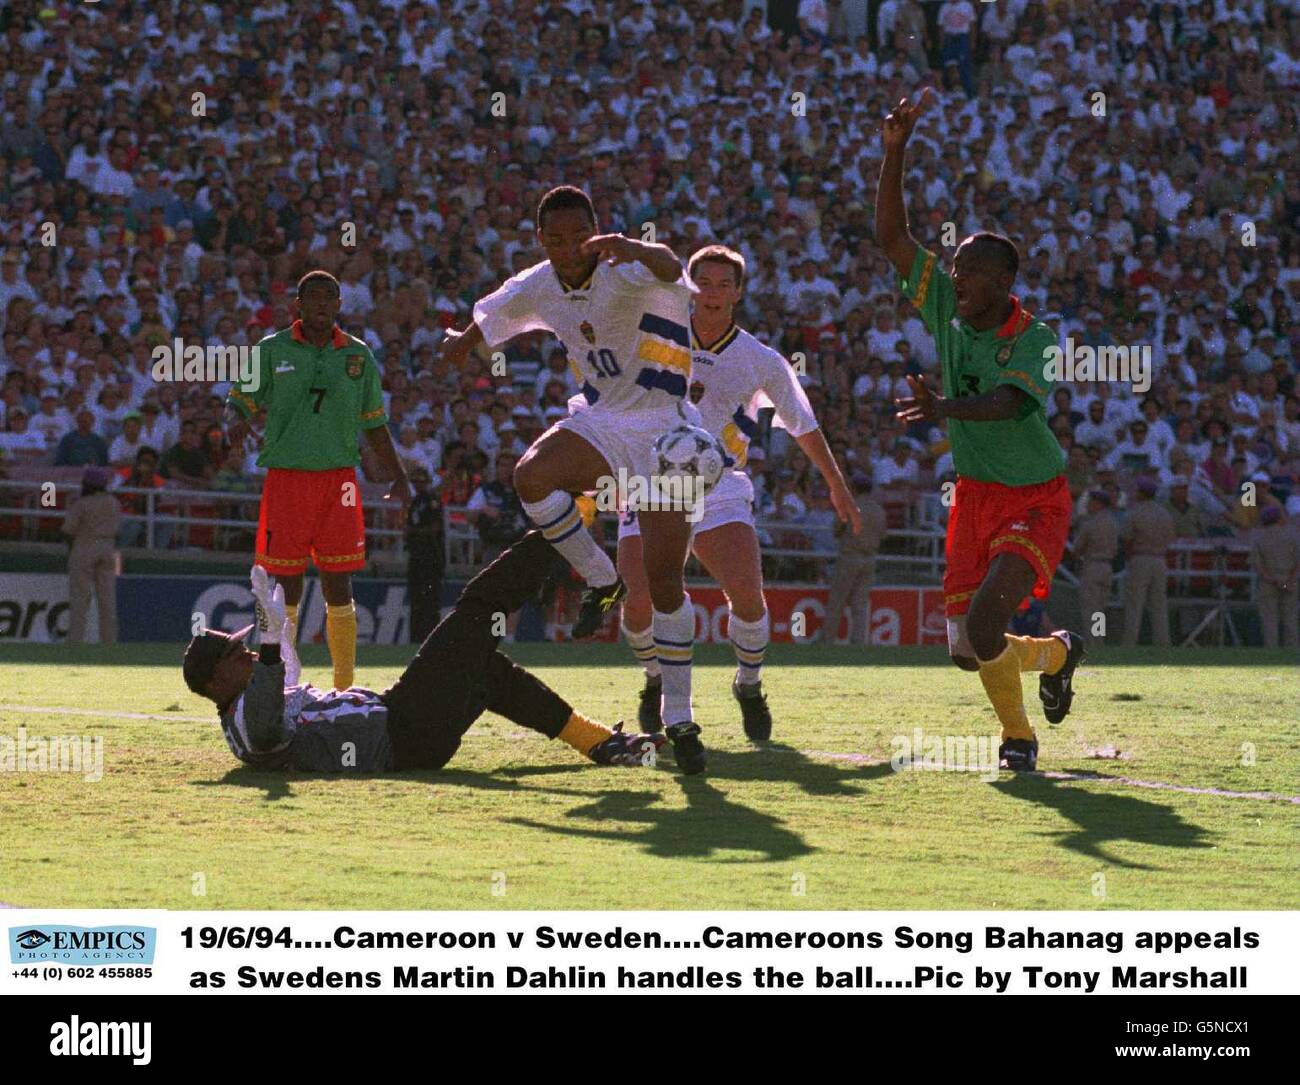 Calcio - Coppa del mondo FIFA USA 1994 - Gruppo B - Svezia / Camerun - Rose Bowl, Pasadena. Cameroons Song Bahanag si appella come Swedens Martin Dahlin gestisce la palla Foto Stock